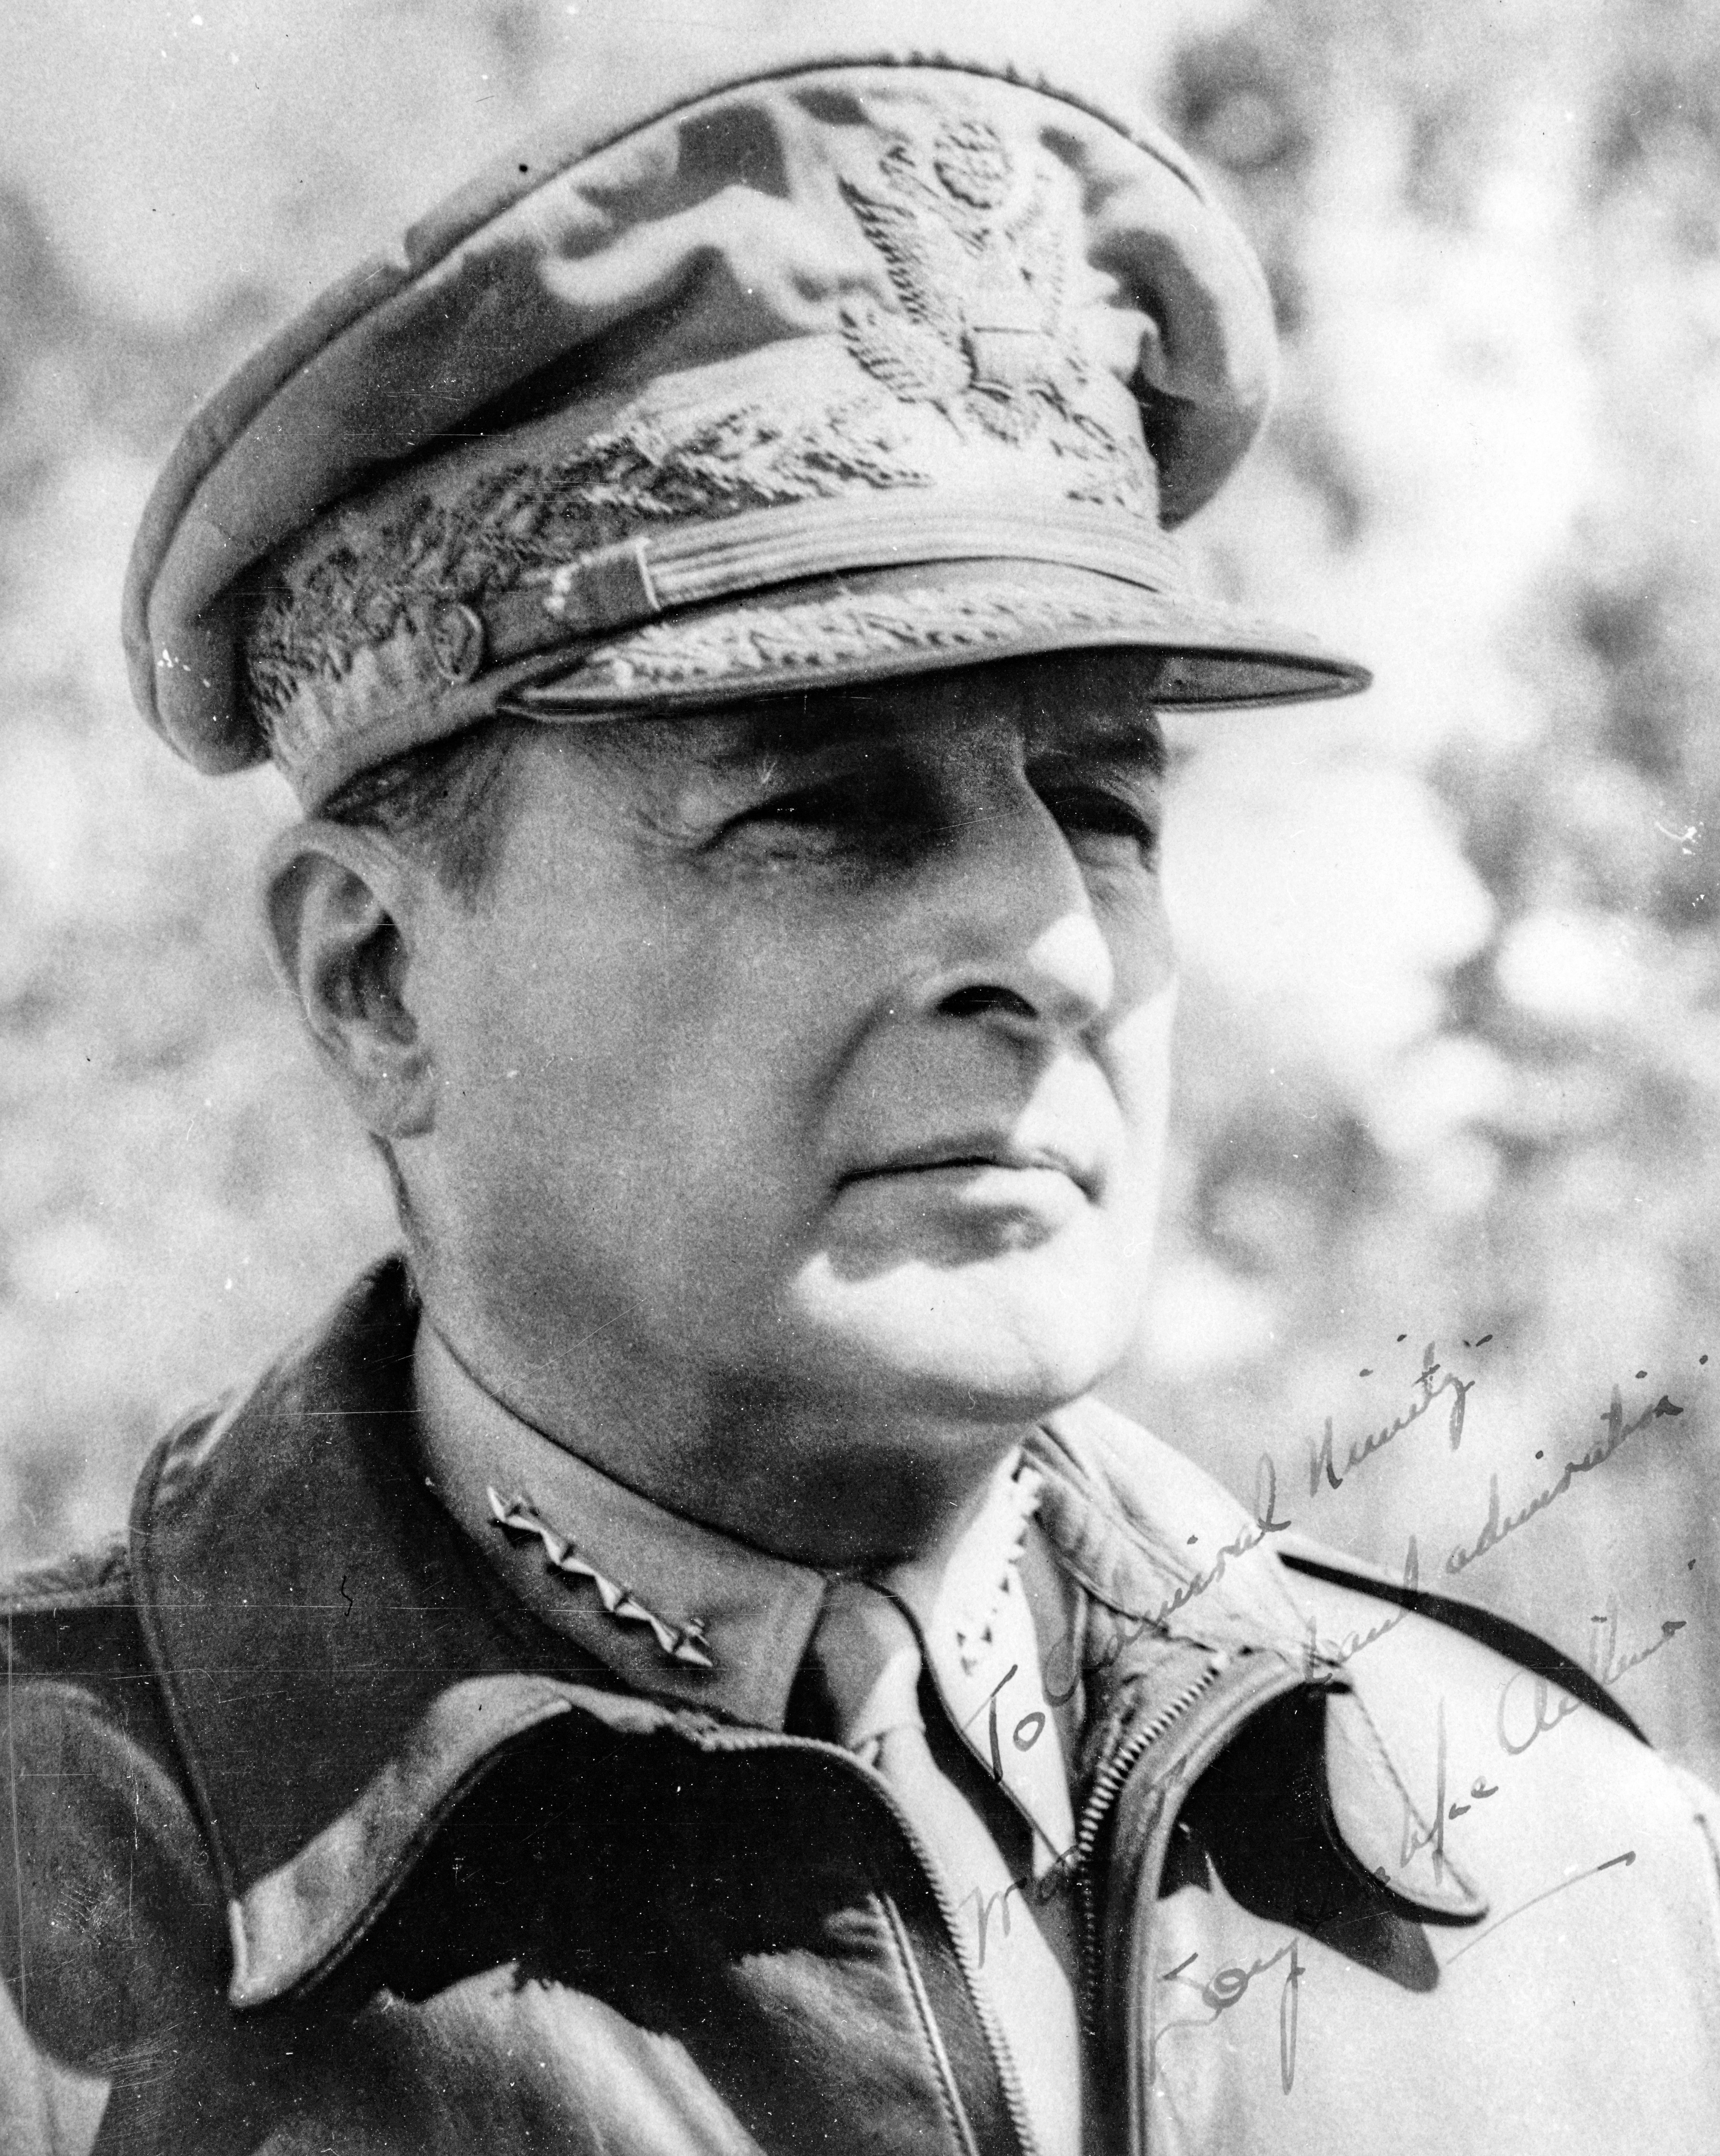 Portrait of General Douglas MacArthur, U.S. Army